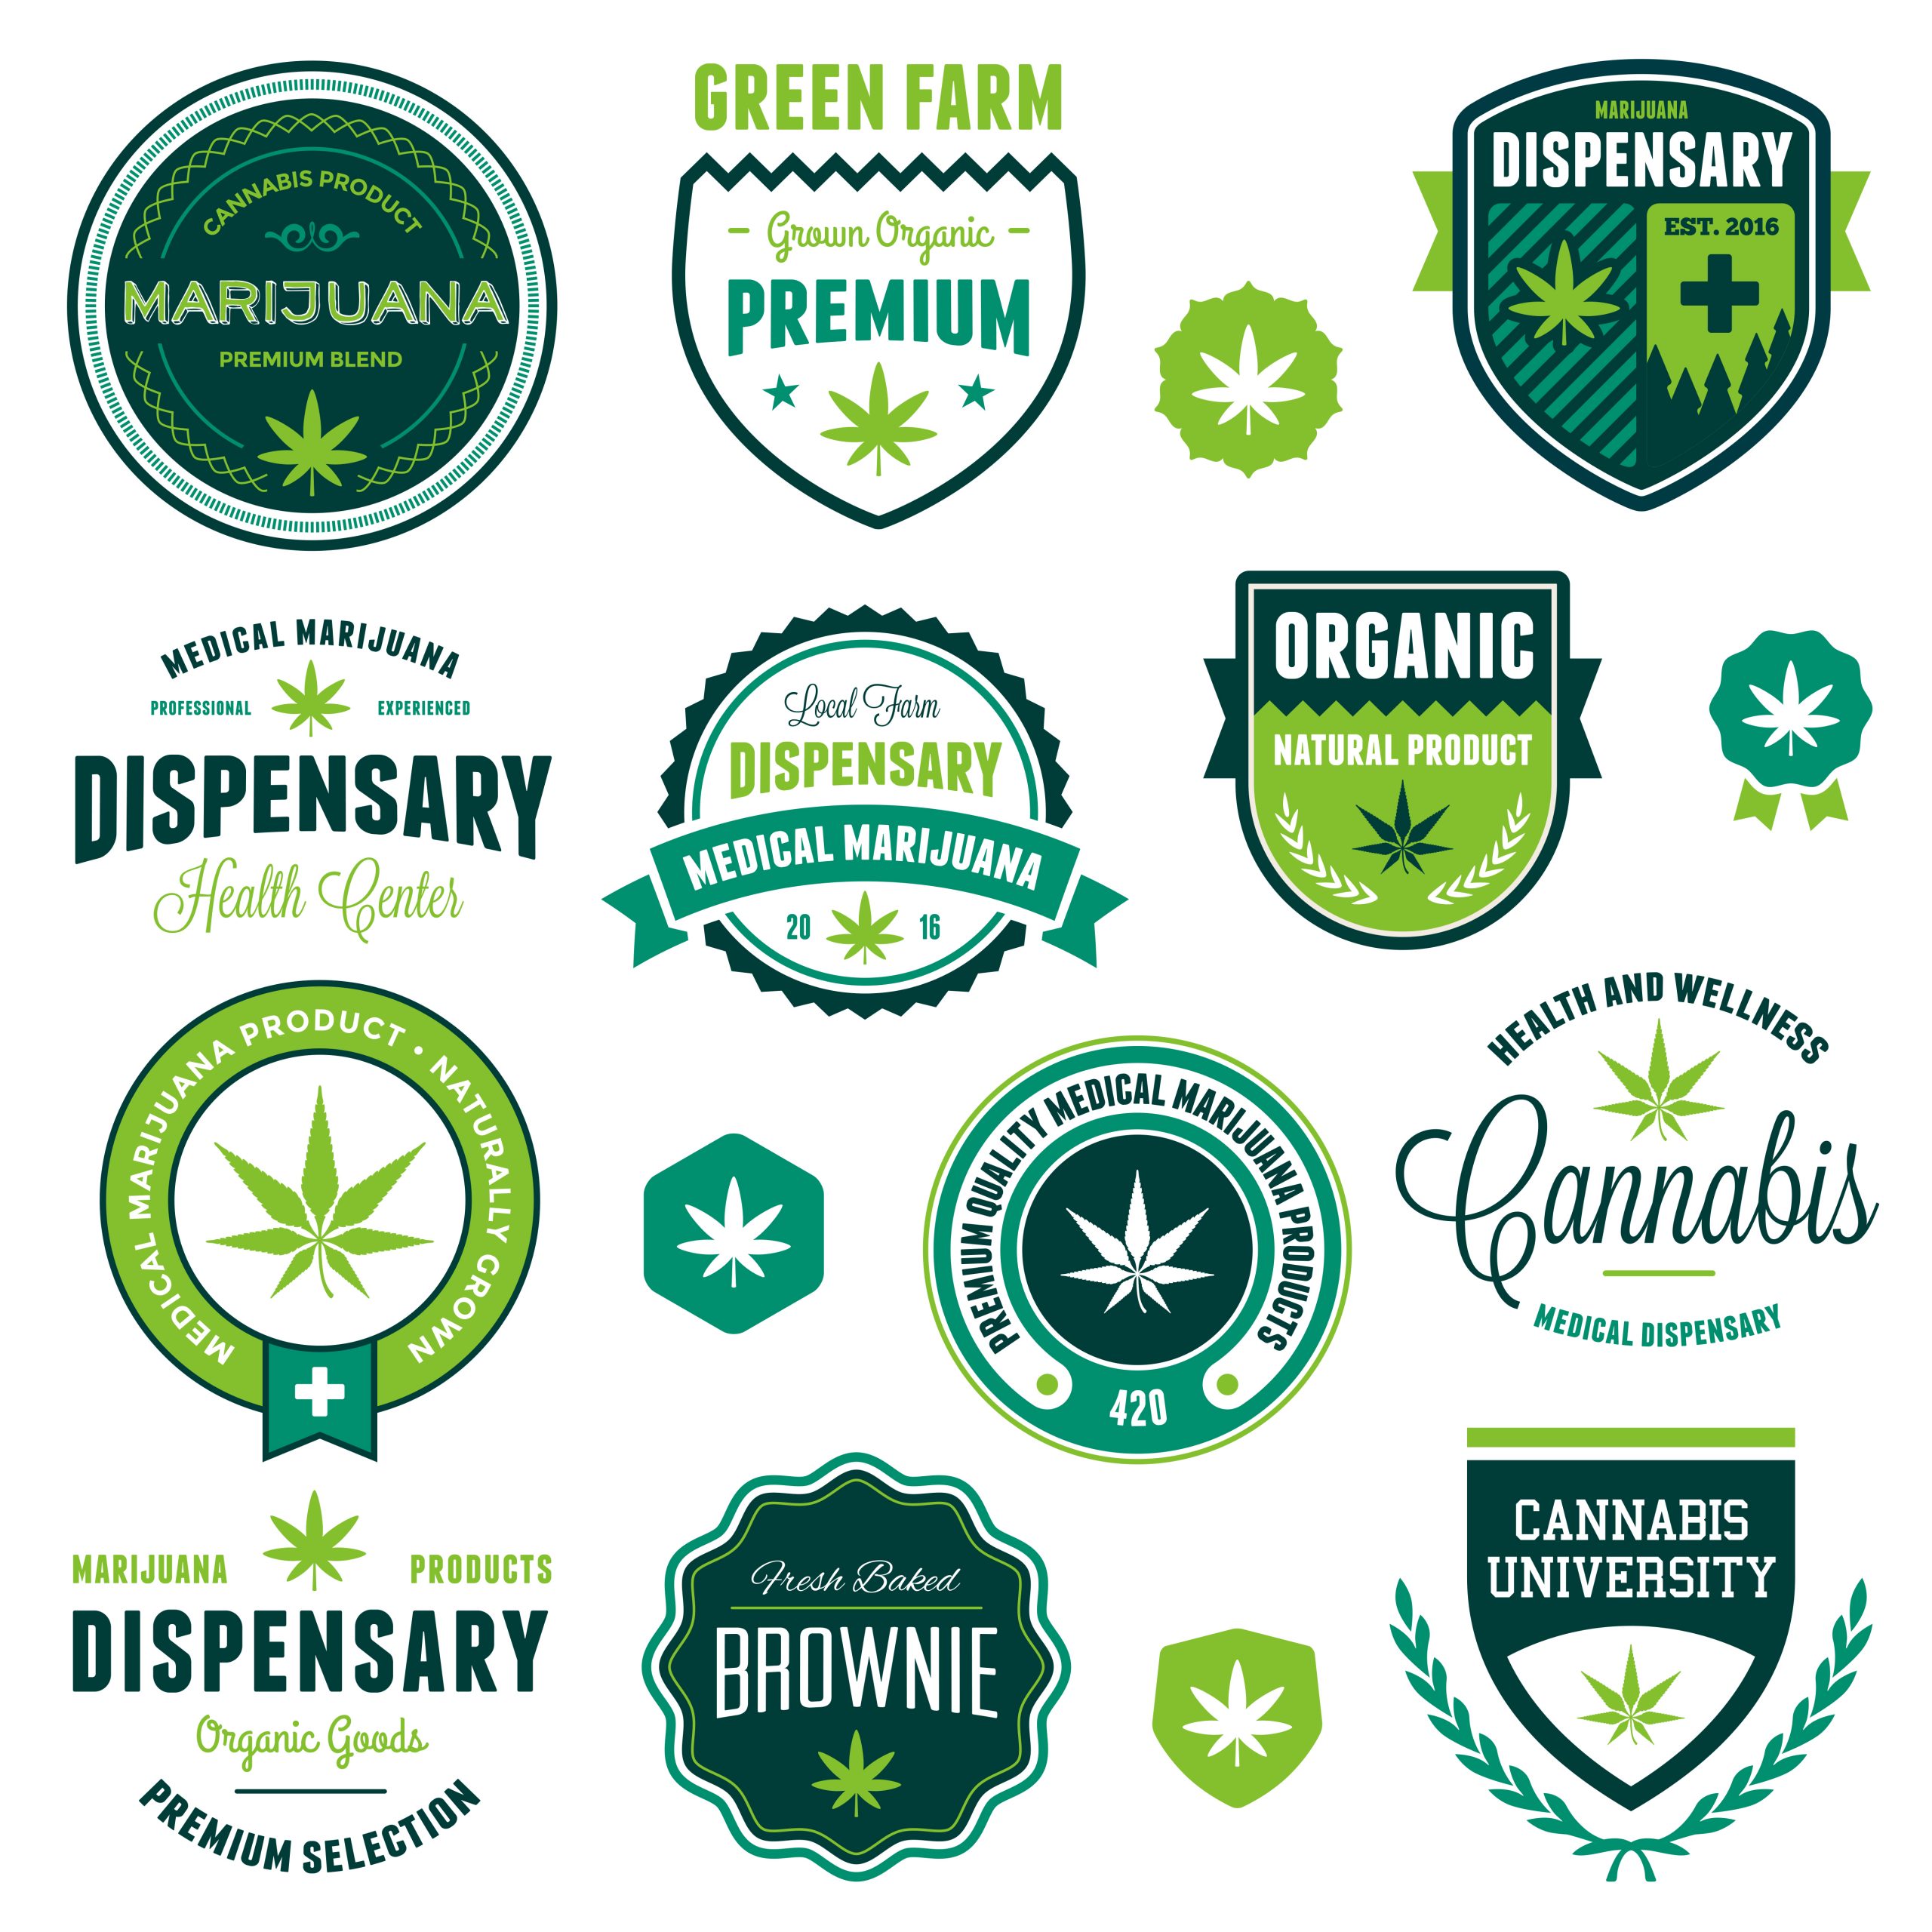 https://depositphotos.com/47231913/stock-illustration-marijuana-product-labels.html